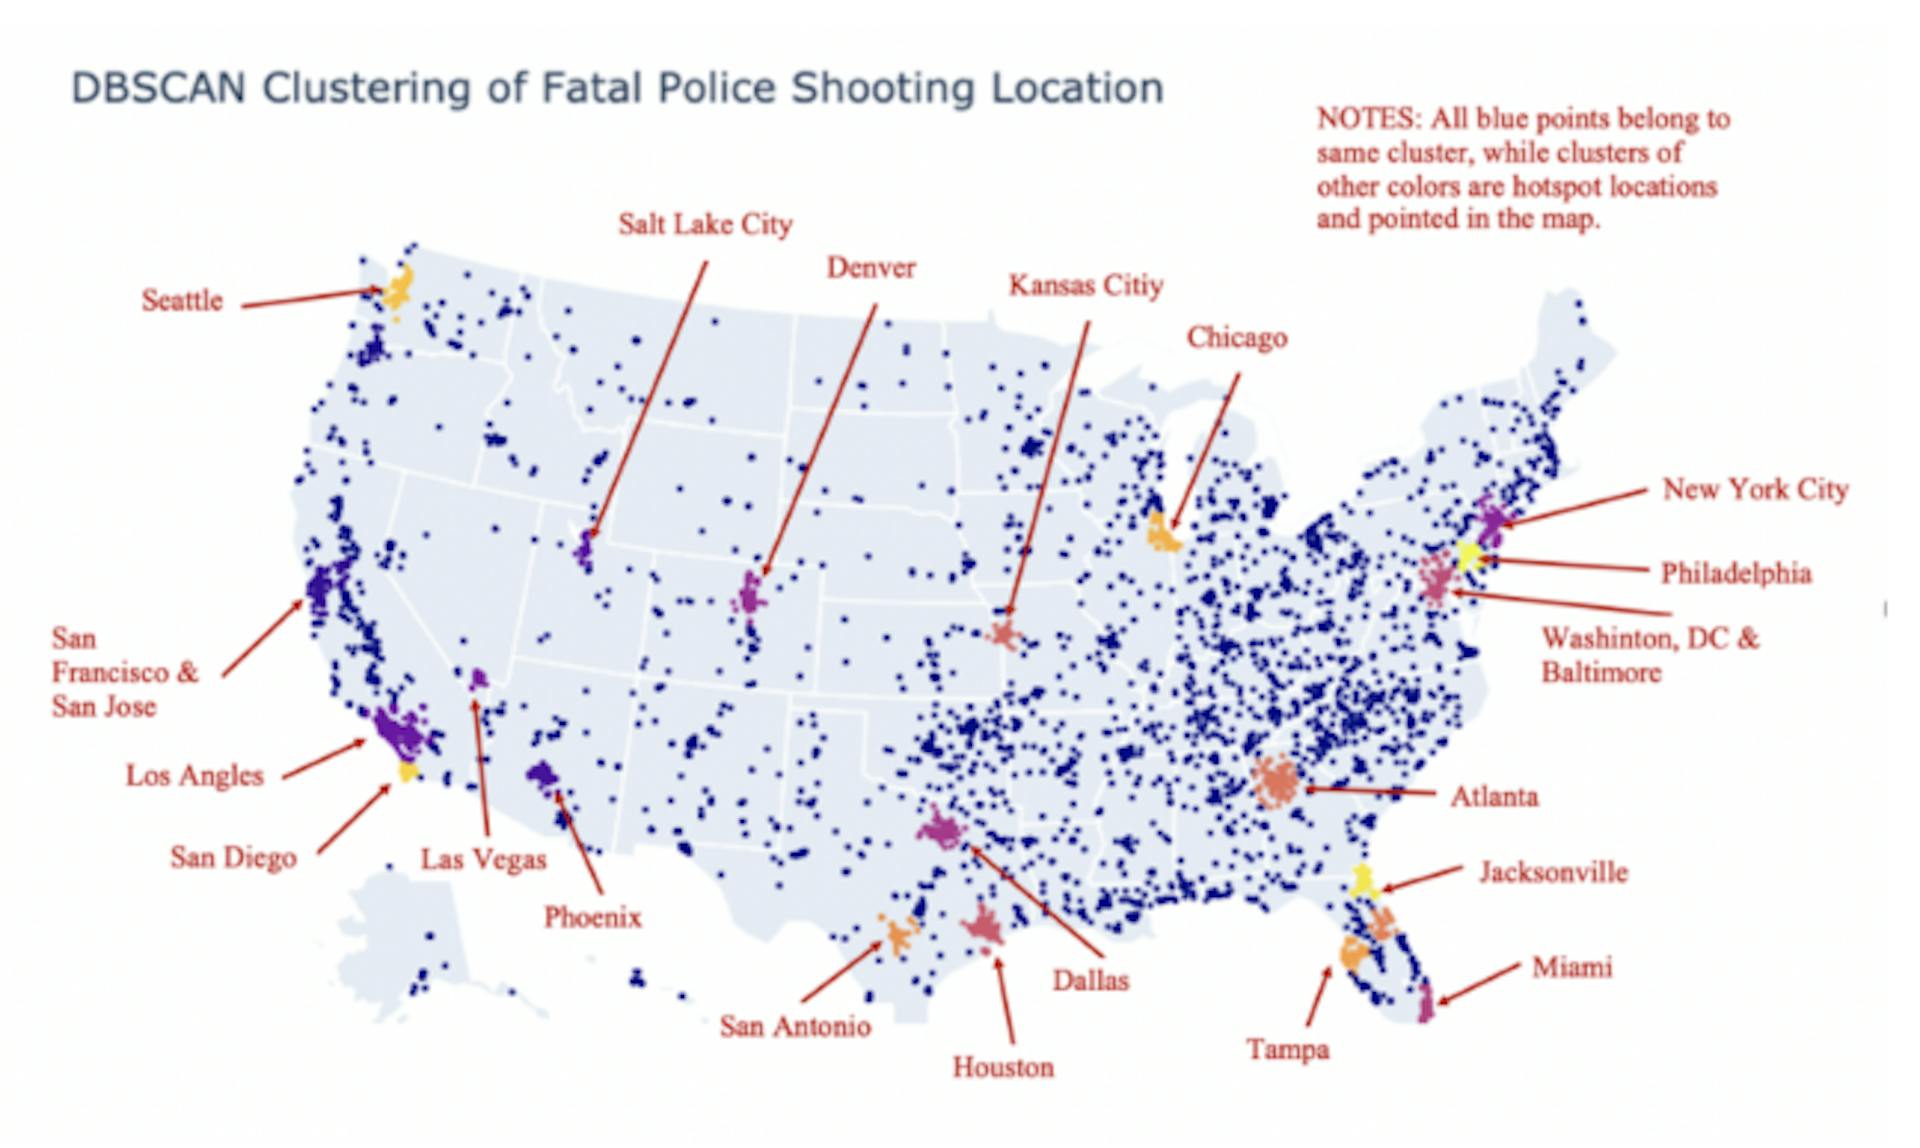 Figure 11. Fatal police shooting hotspots distribution